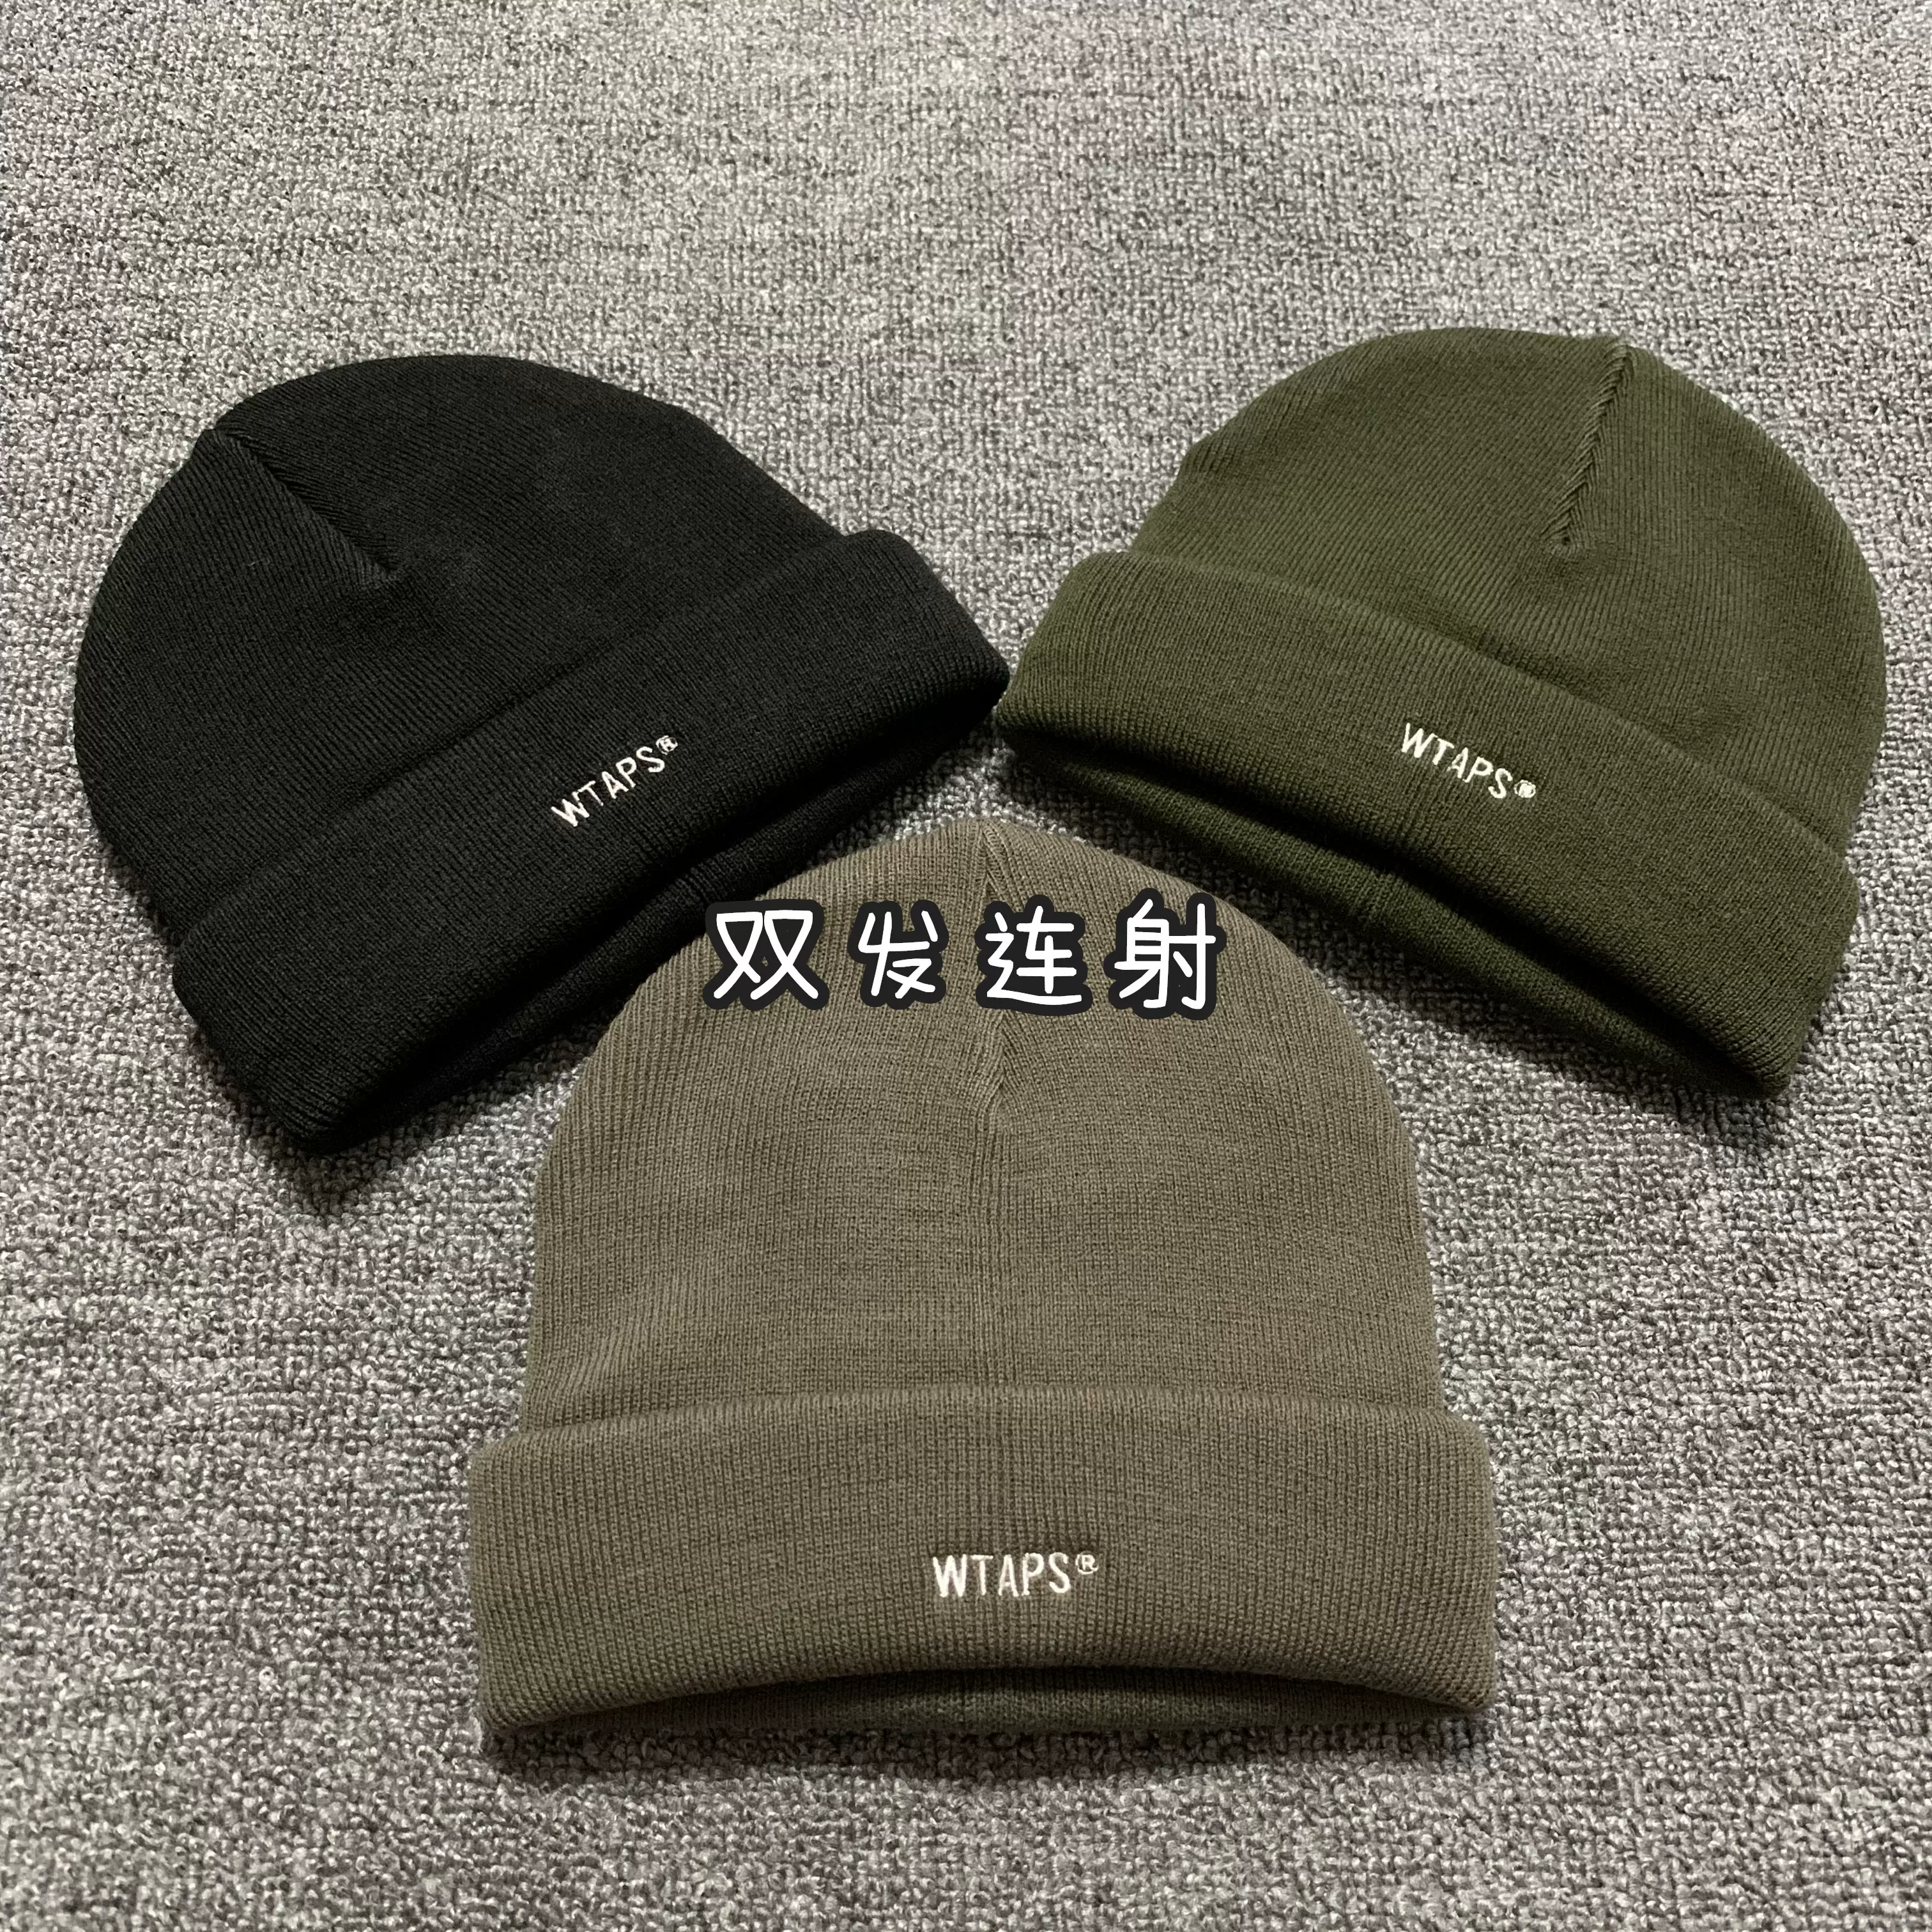 现货WTAPS BEANIE / BEANIE / ACRYLIC 刺绣LOGO冷帽20AW-Taobao